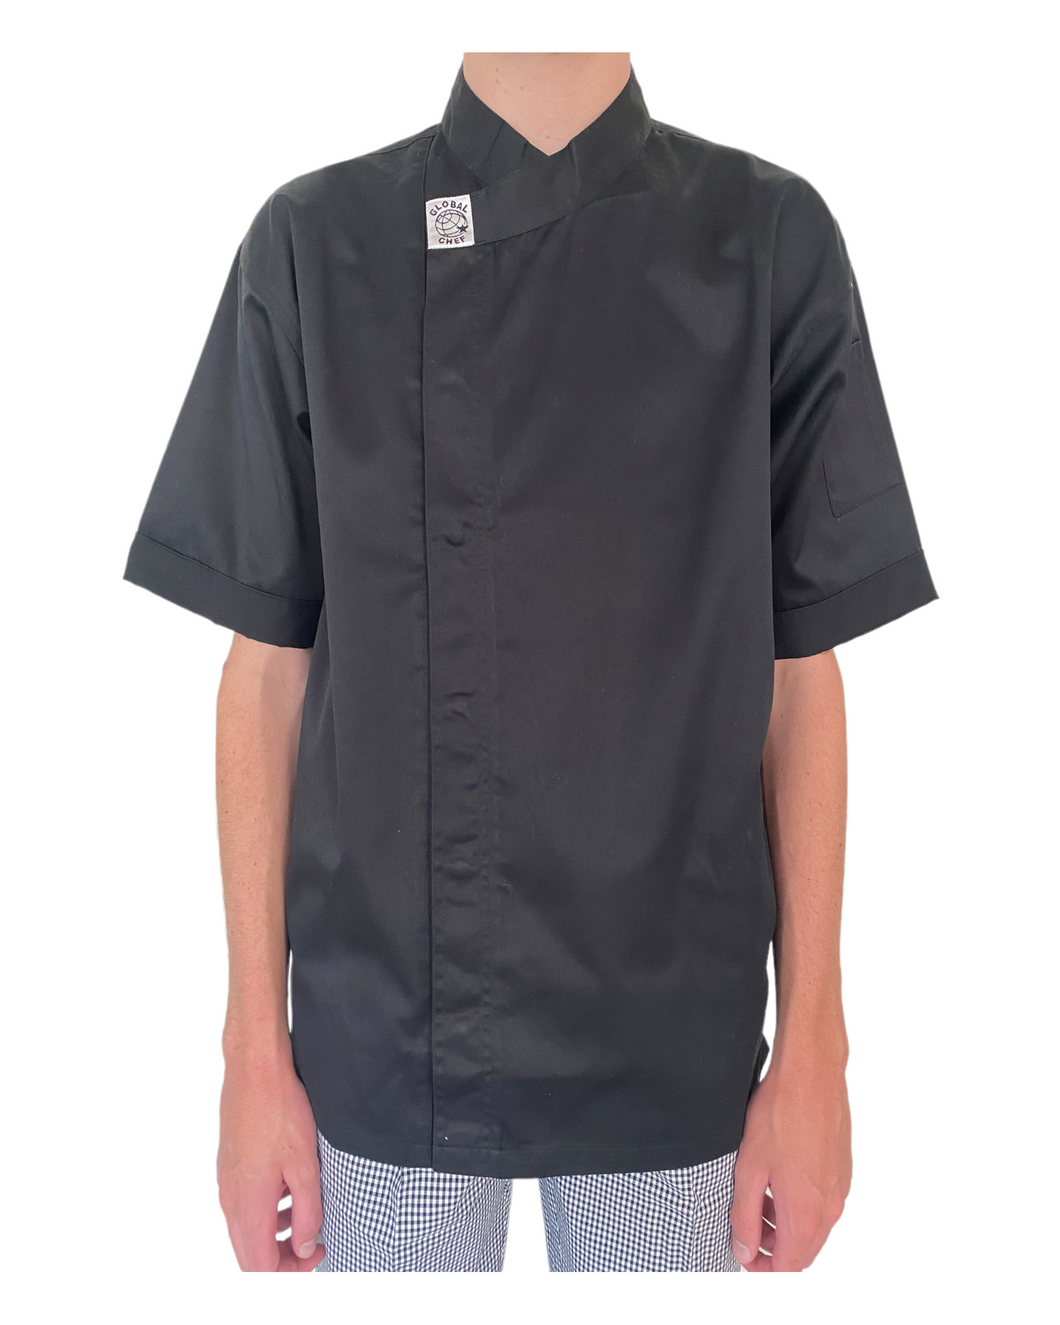 GC-Modern Black Short Sleeve Chef Jacket - Global Chef 